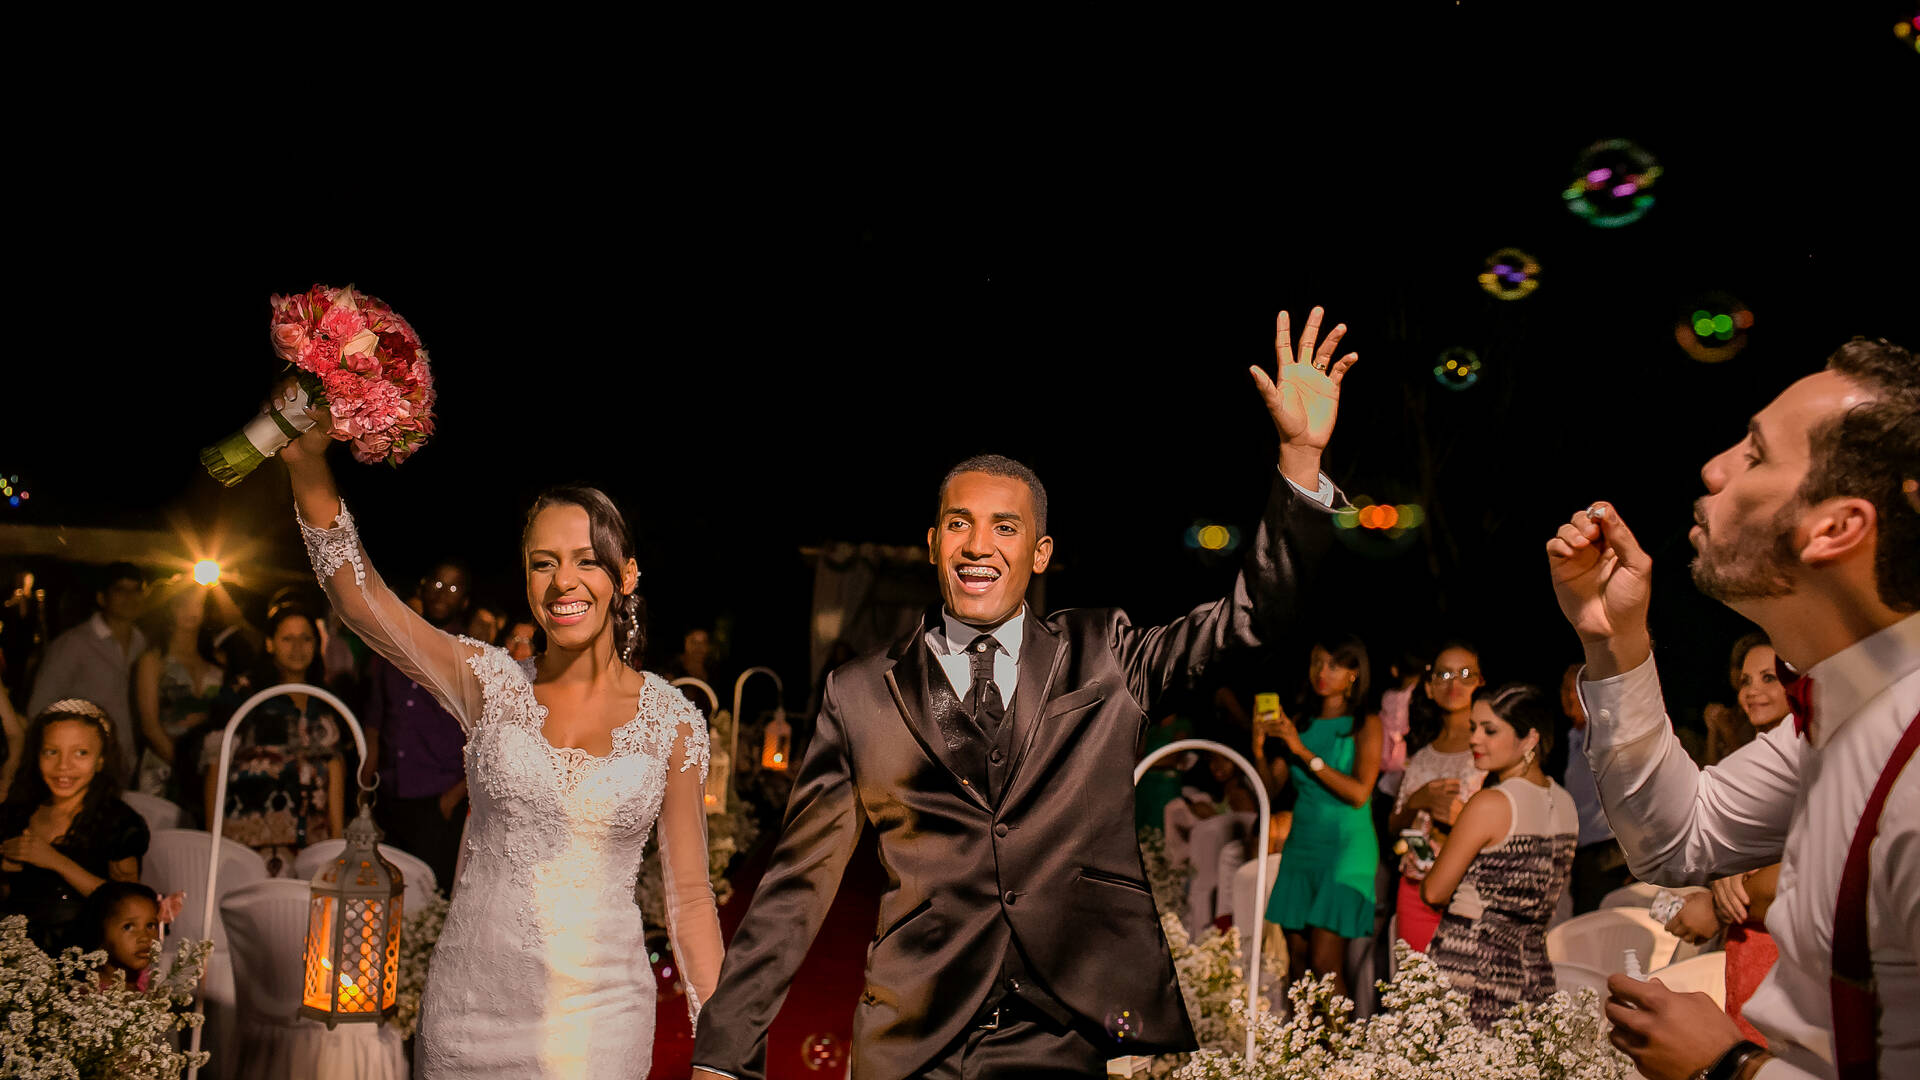 Brazil Wedding Traditions